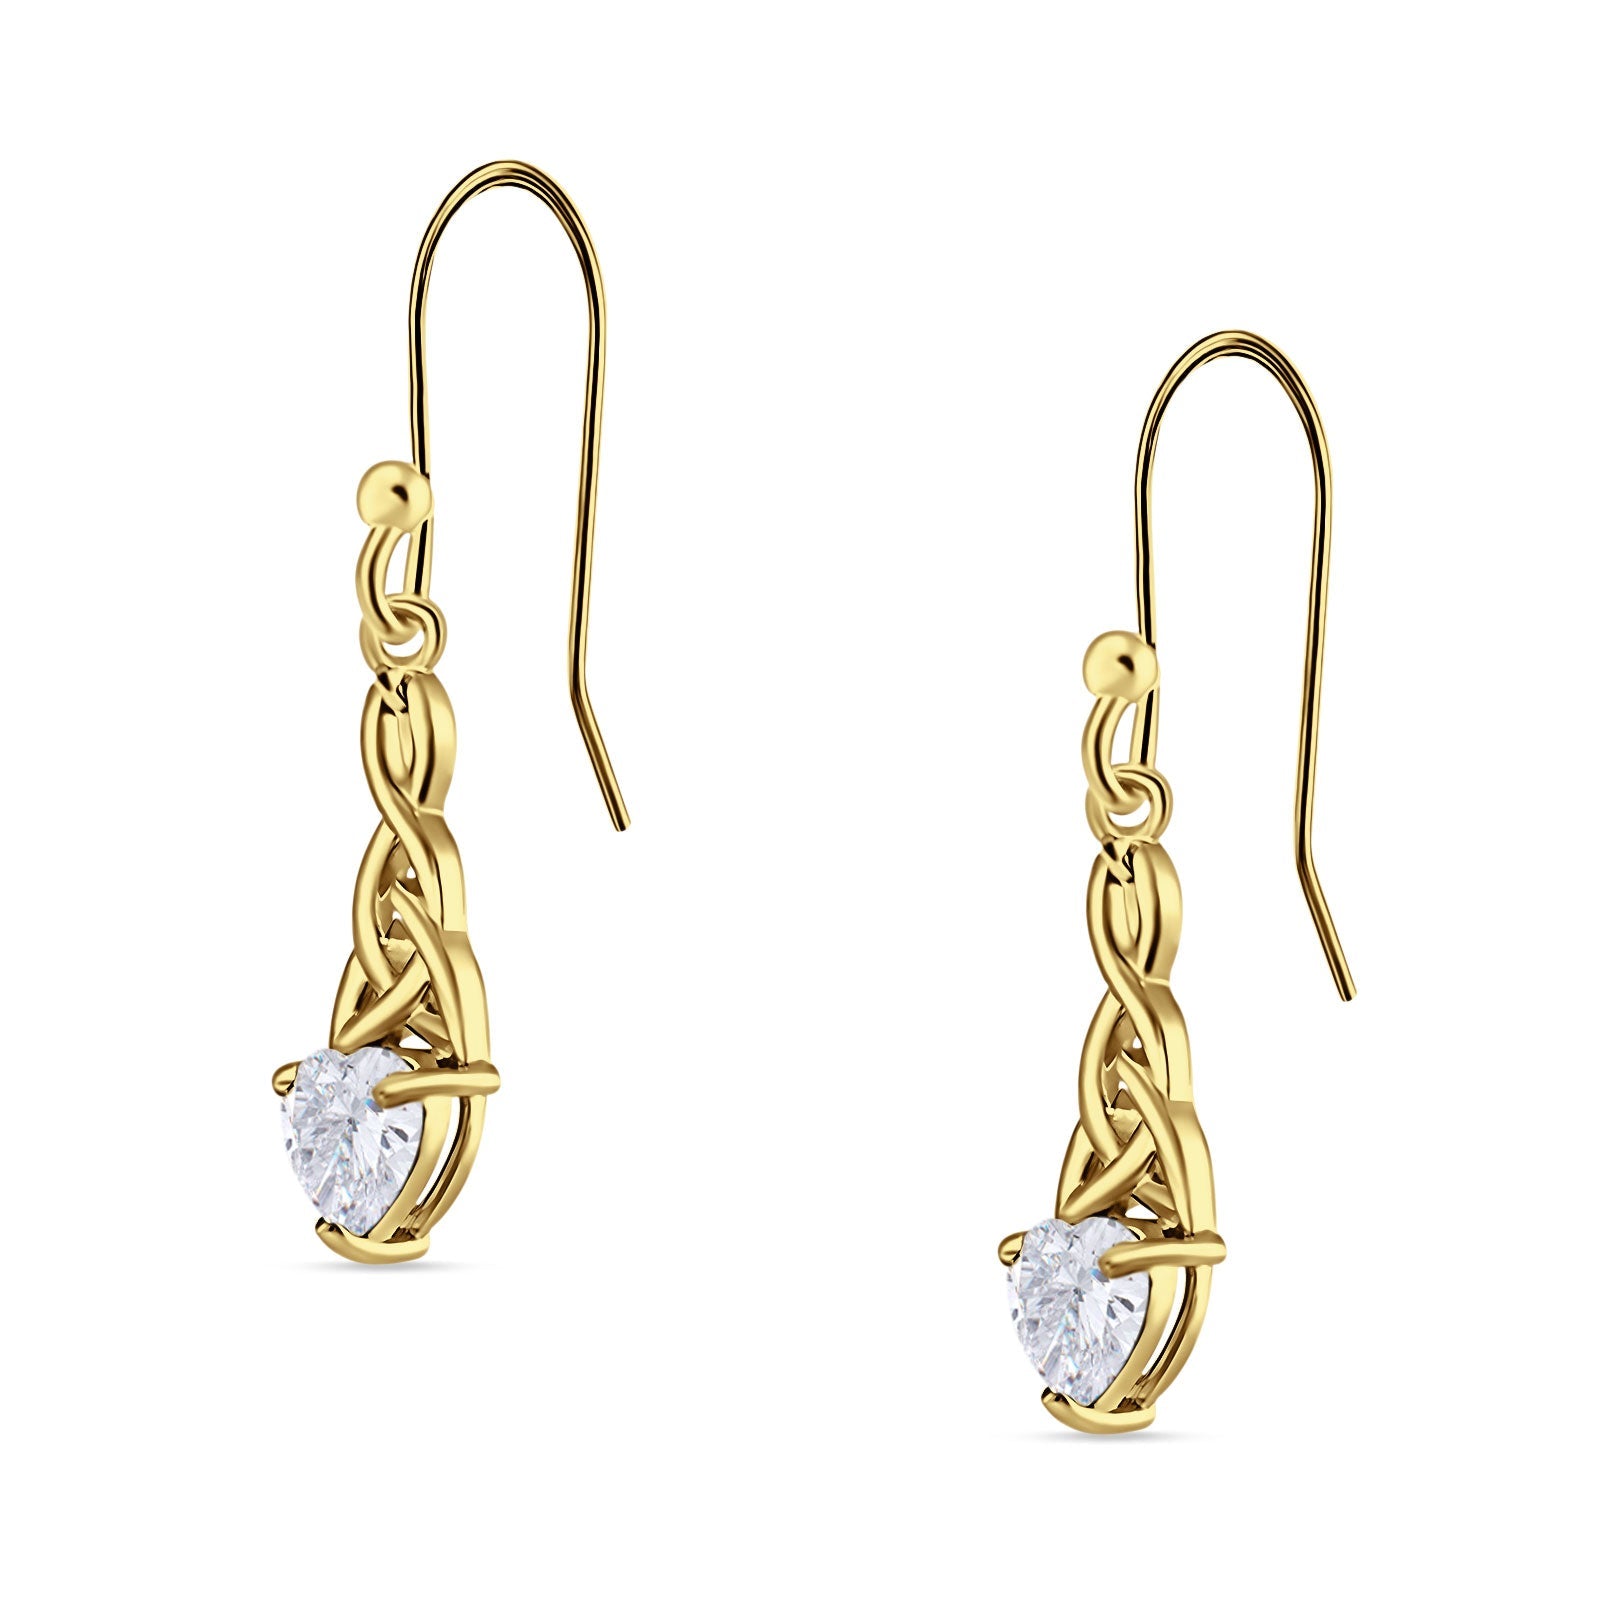 Delectable Hook Type Gold Drop Earrings